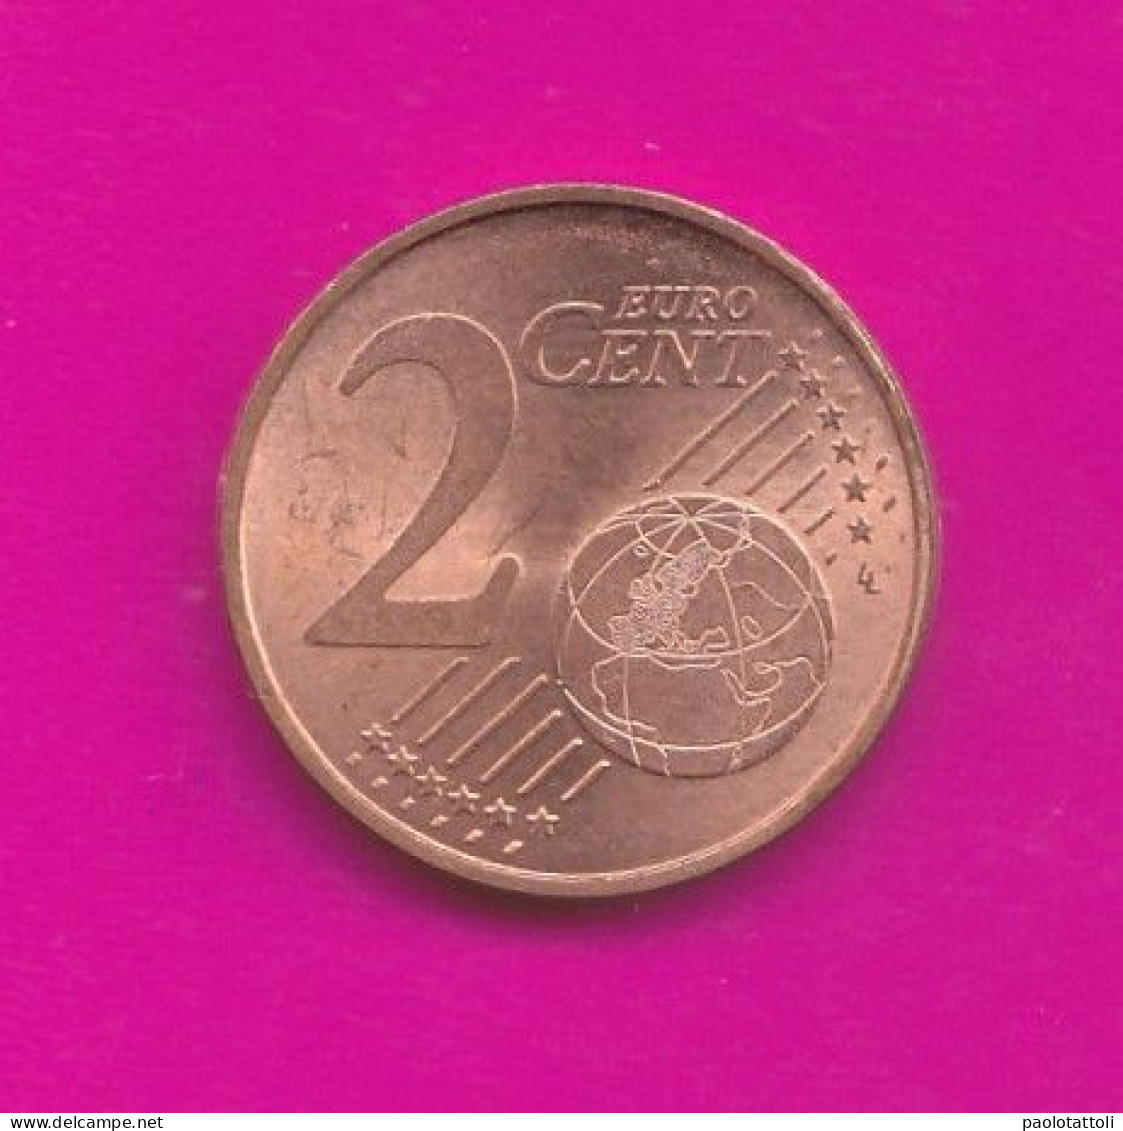 Germany, D 2021- 2 Euro Cent- Nickel Brass- Obverse Oak Leaf. Reverse Denomination- SPL, EF, SUP, VZ- - Germany